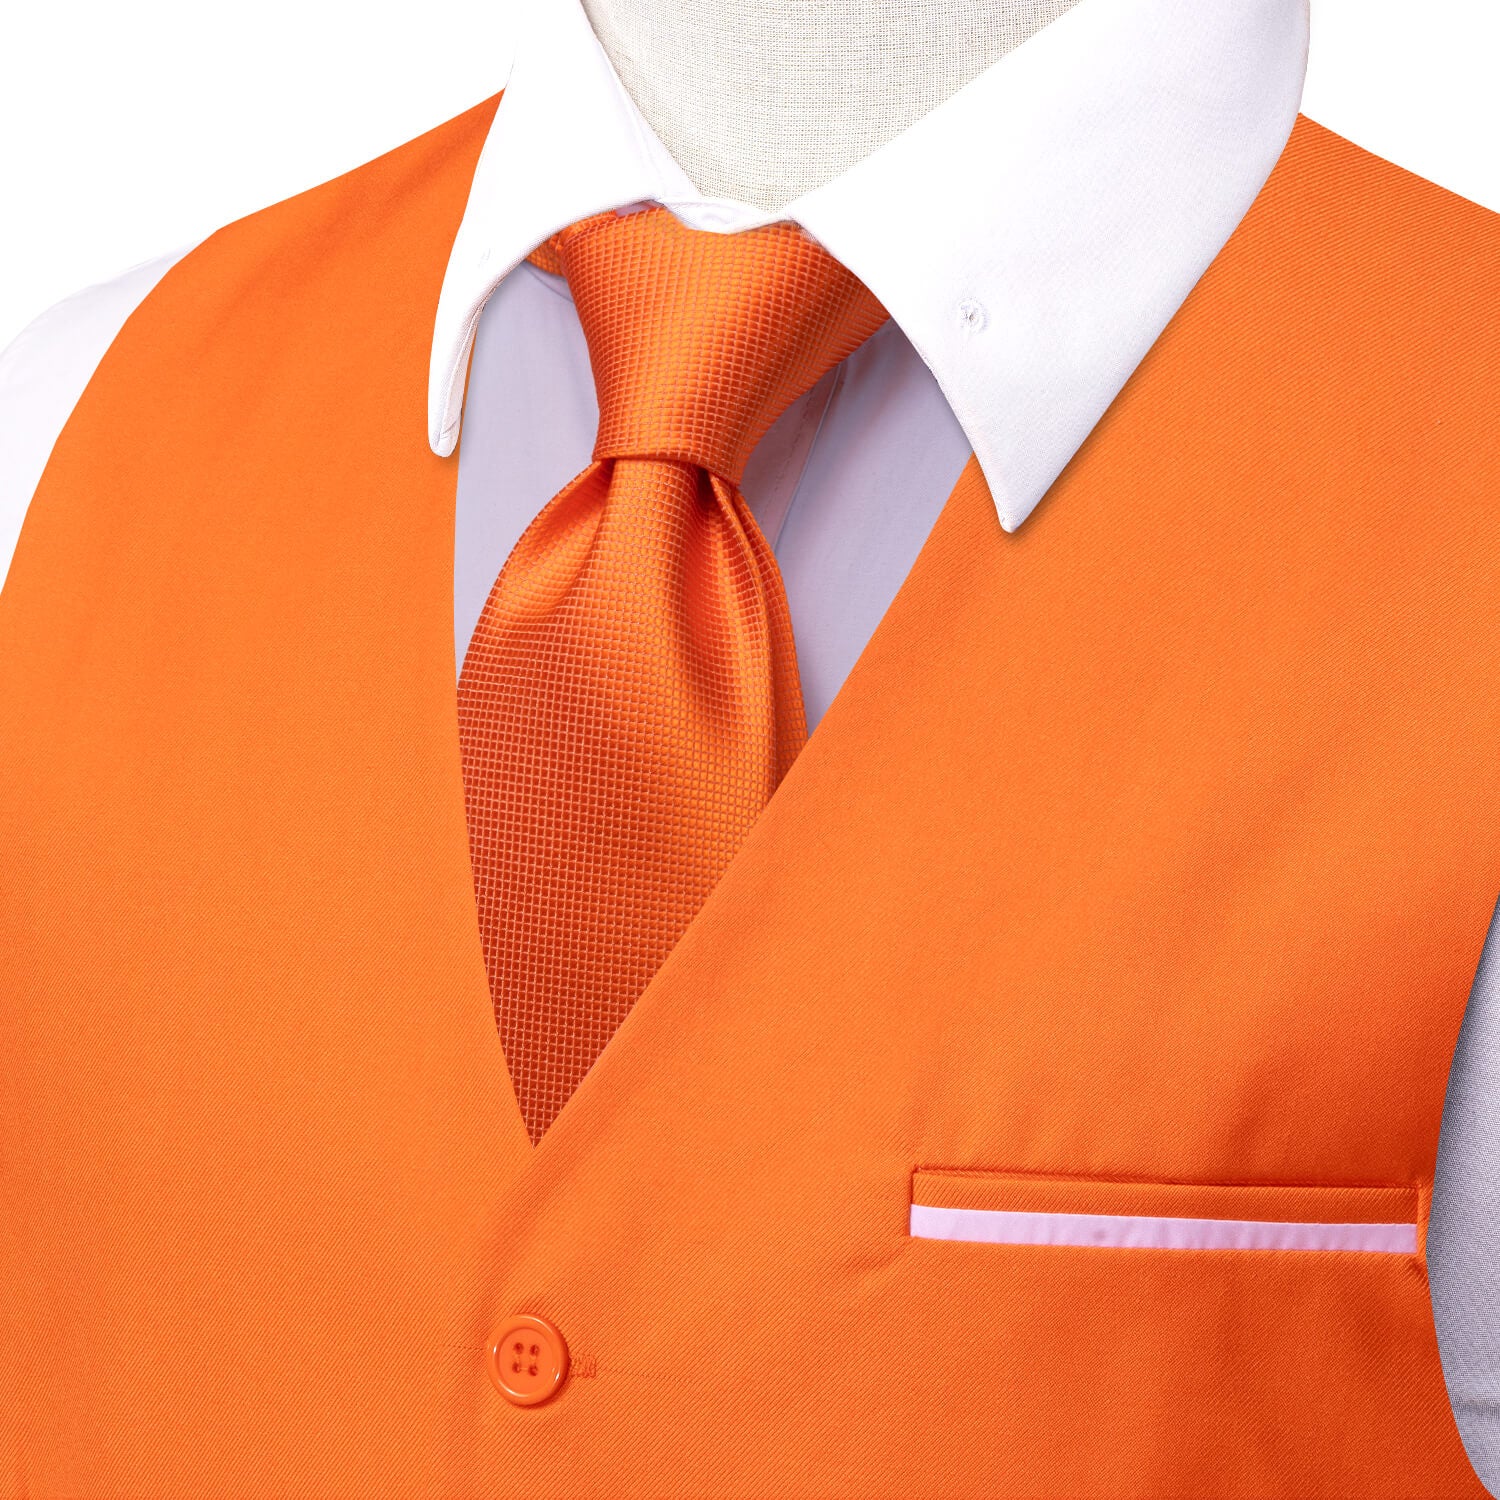 Hi-Tie Men's Work Vest Coral Orange Solid Silk Vest Business Dress Suit